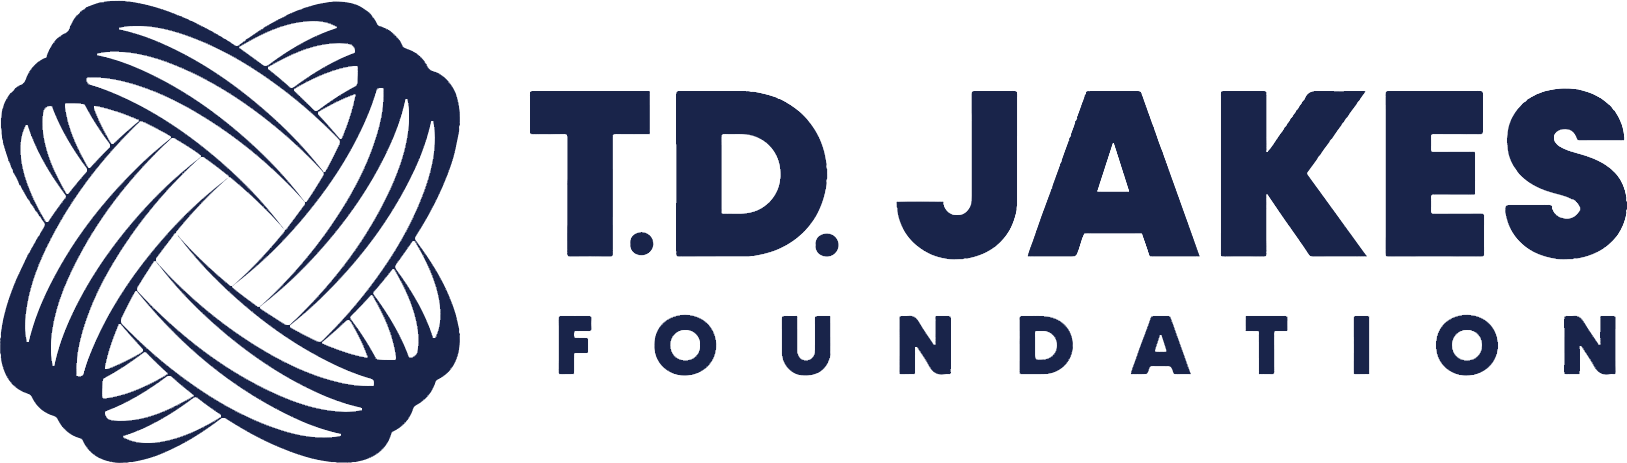 T.D. Jakes Foundation